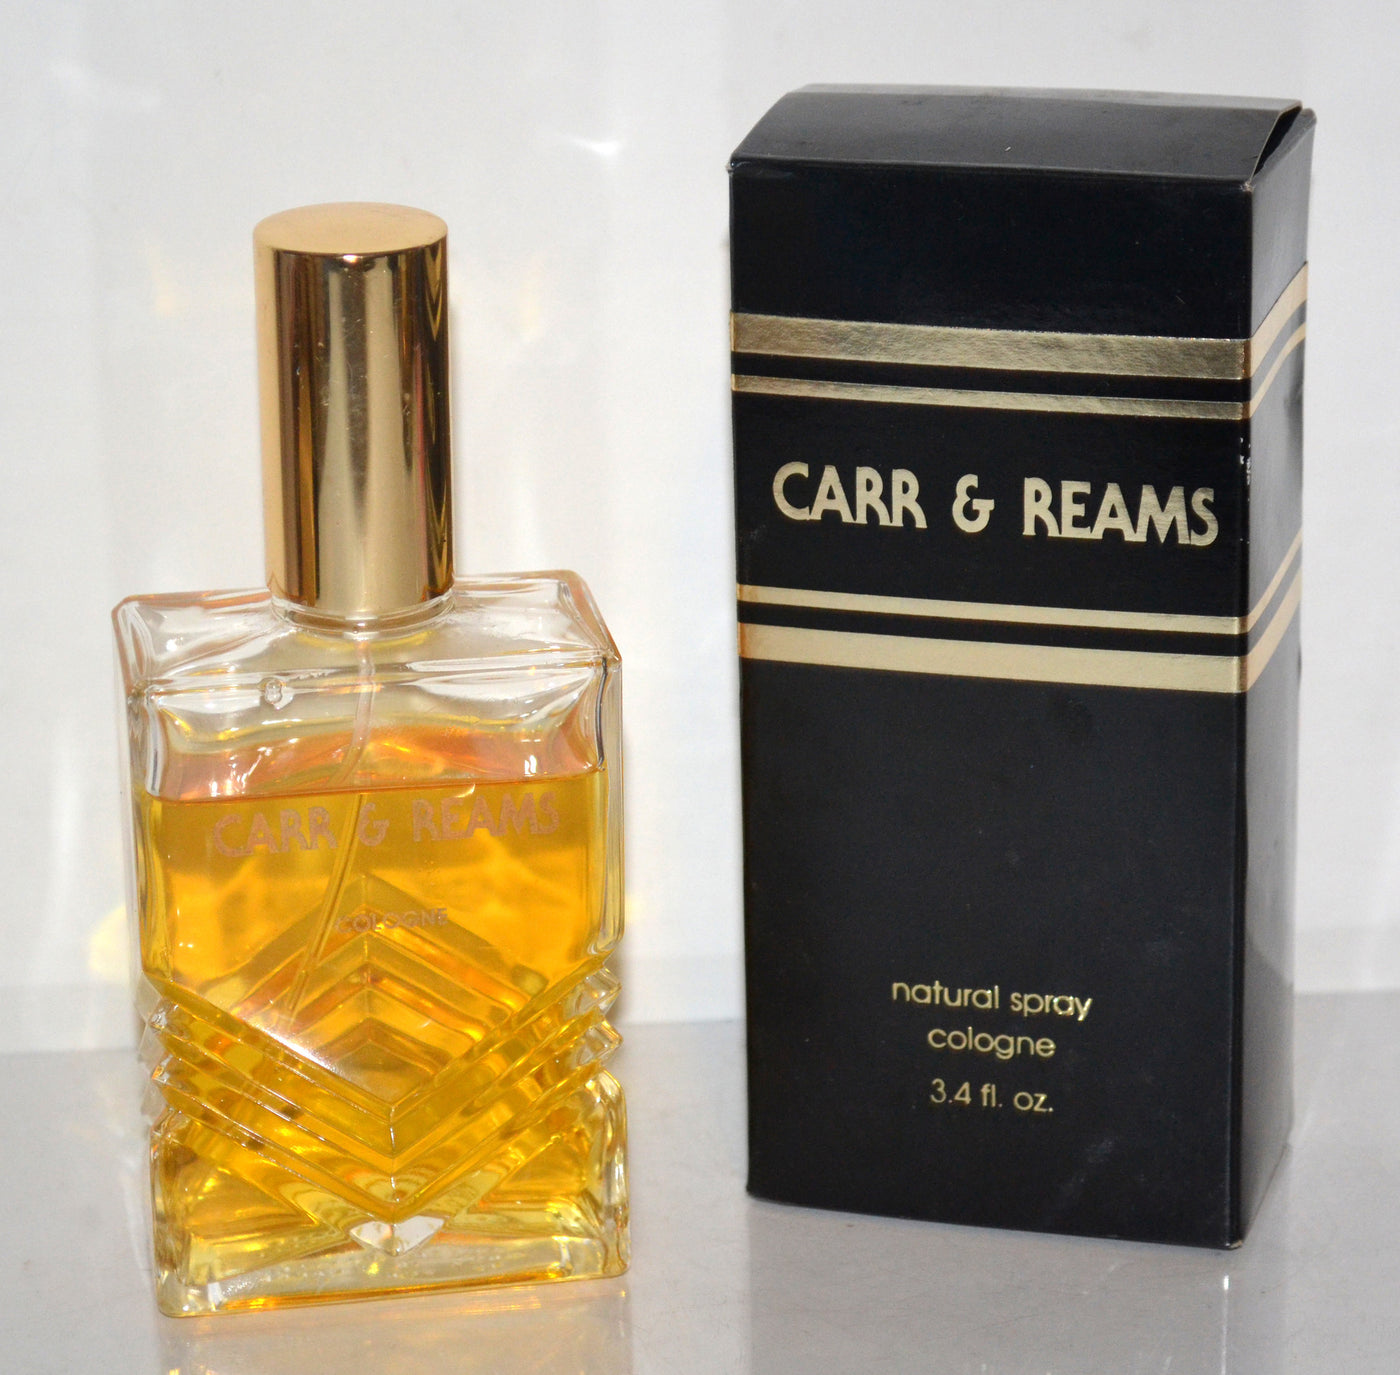 Carr & Reams Cologne